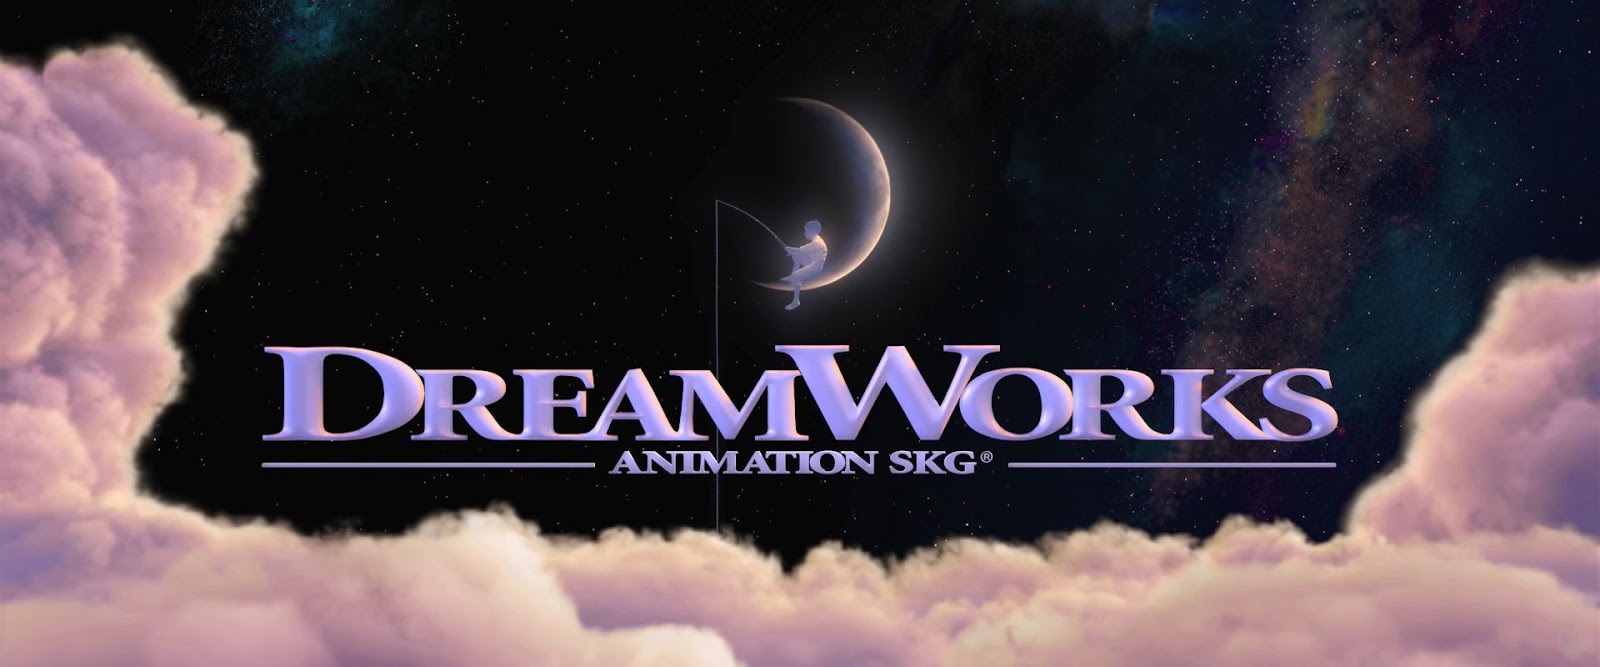 dreamworks animation logo 1